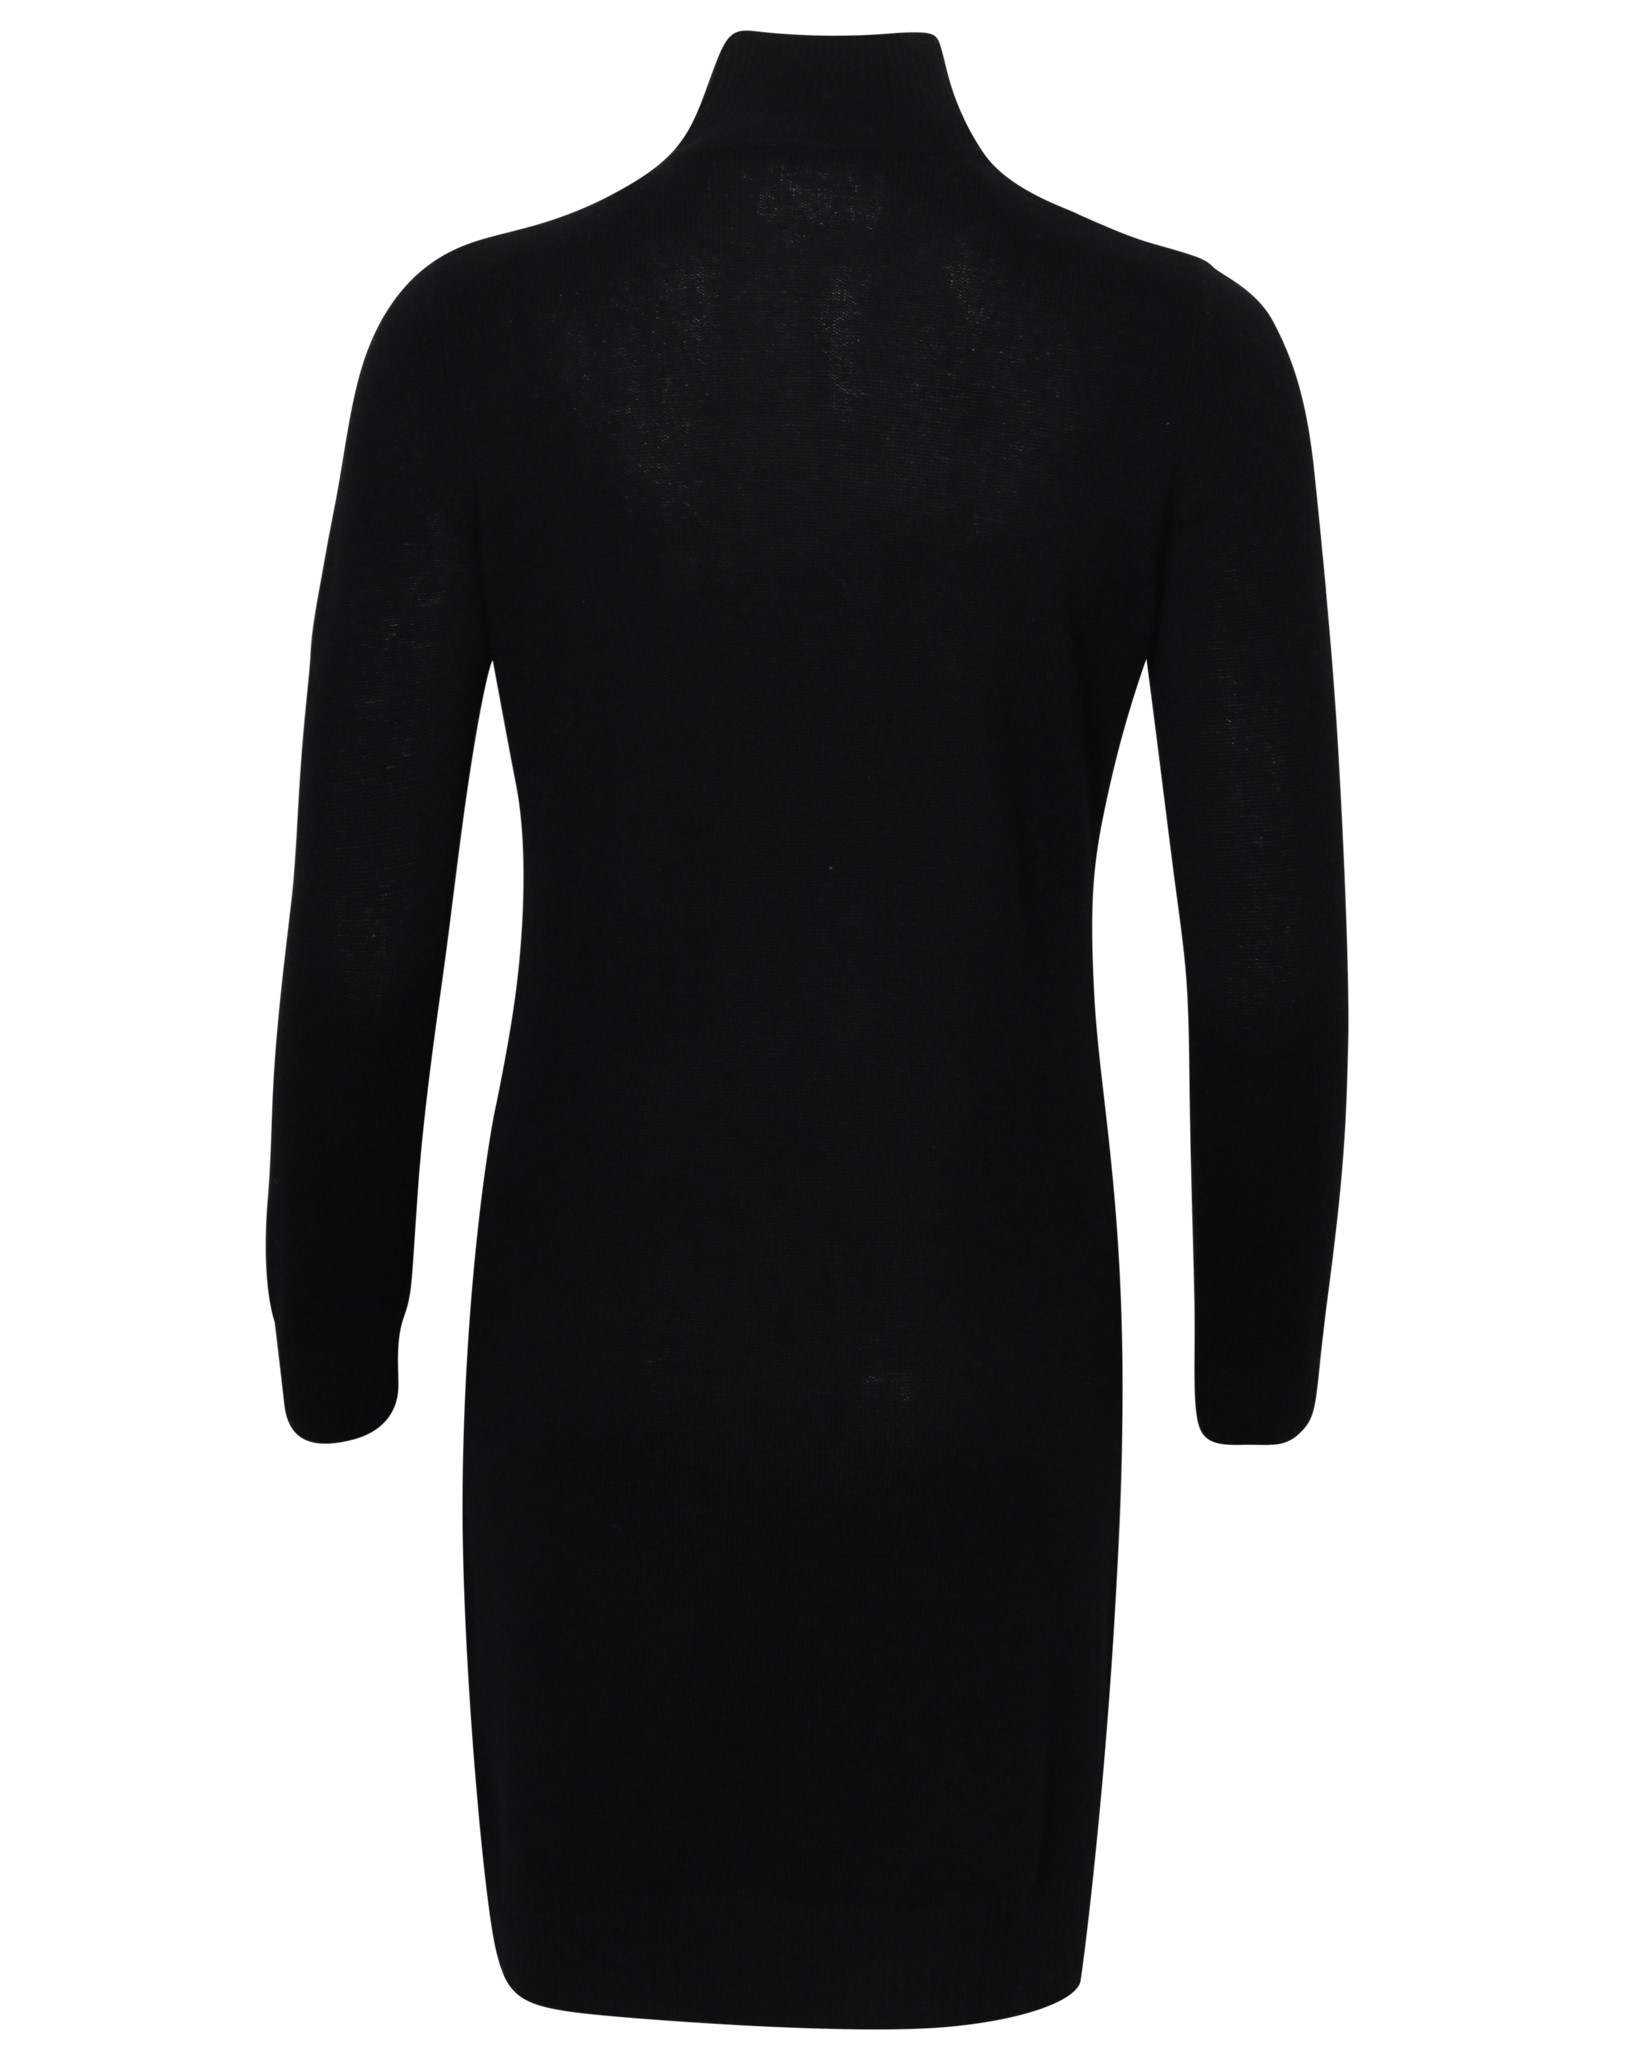 ABSOLUT CASHMERE Dress Cecilia in Black